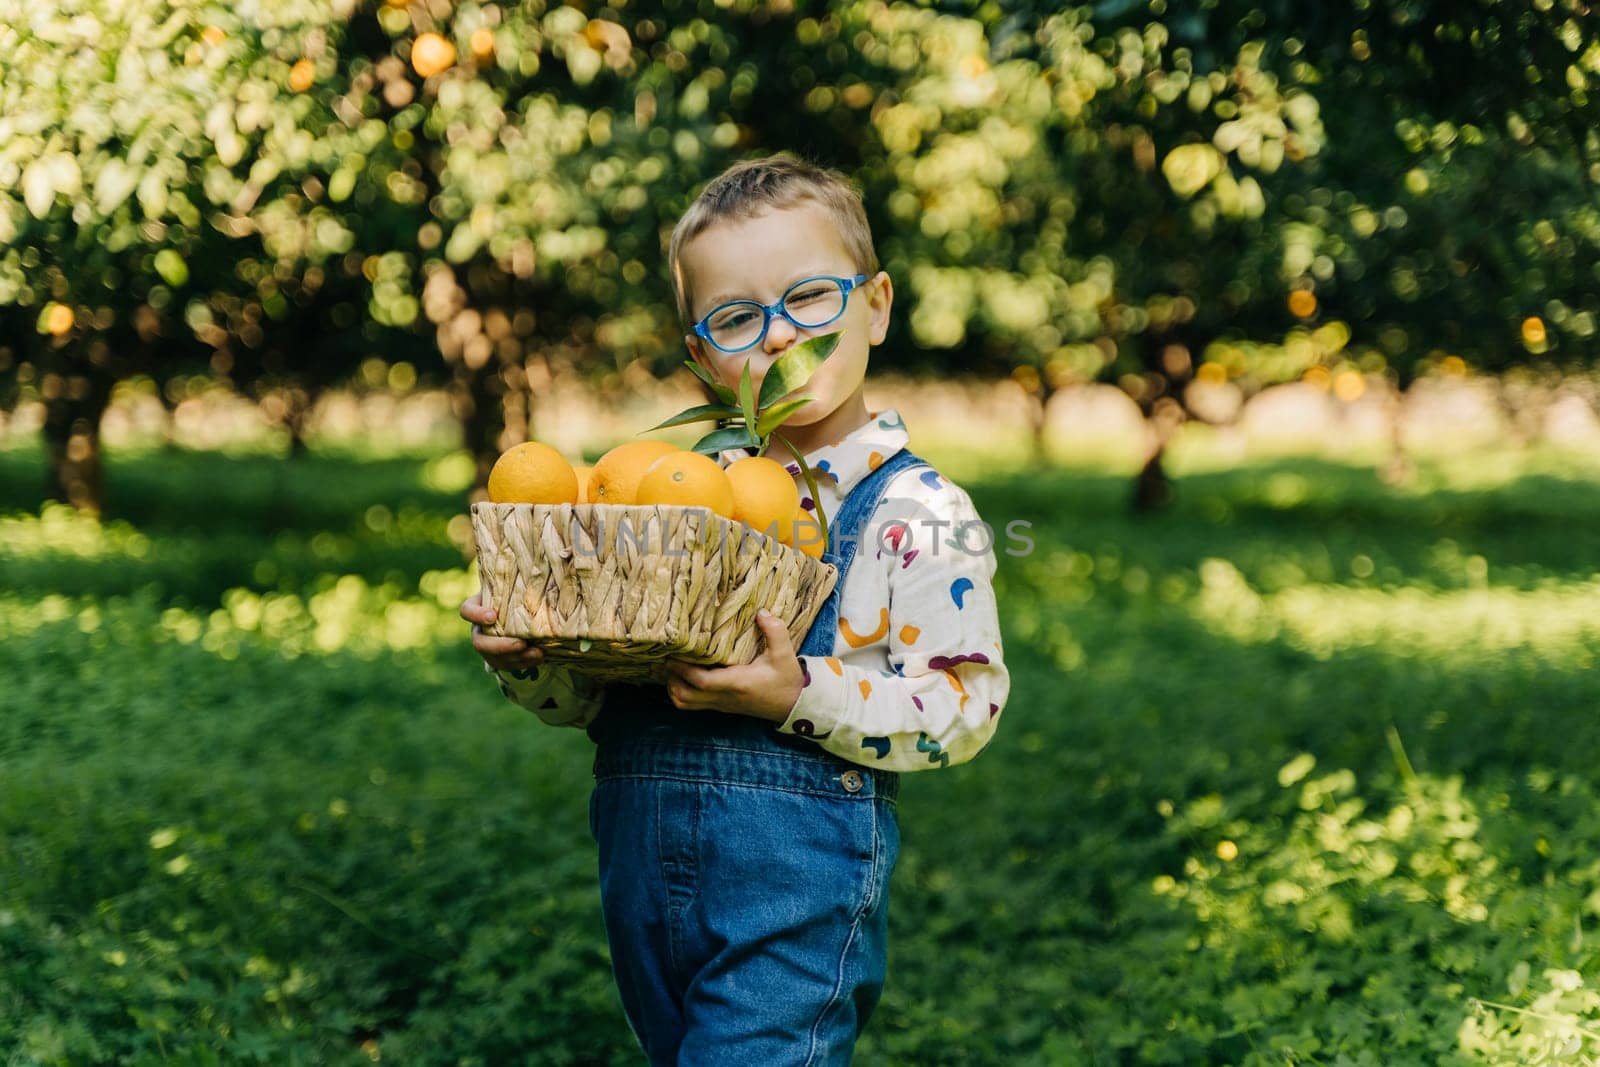 Portrait of Cute Little Farmer Boy Holding Wicker Basket full of fresh Organic Oranges. Happy child kid in eyeglasses harvest vegetable fruit in green orange garden outdoors with trees on background by Ostanina